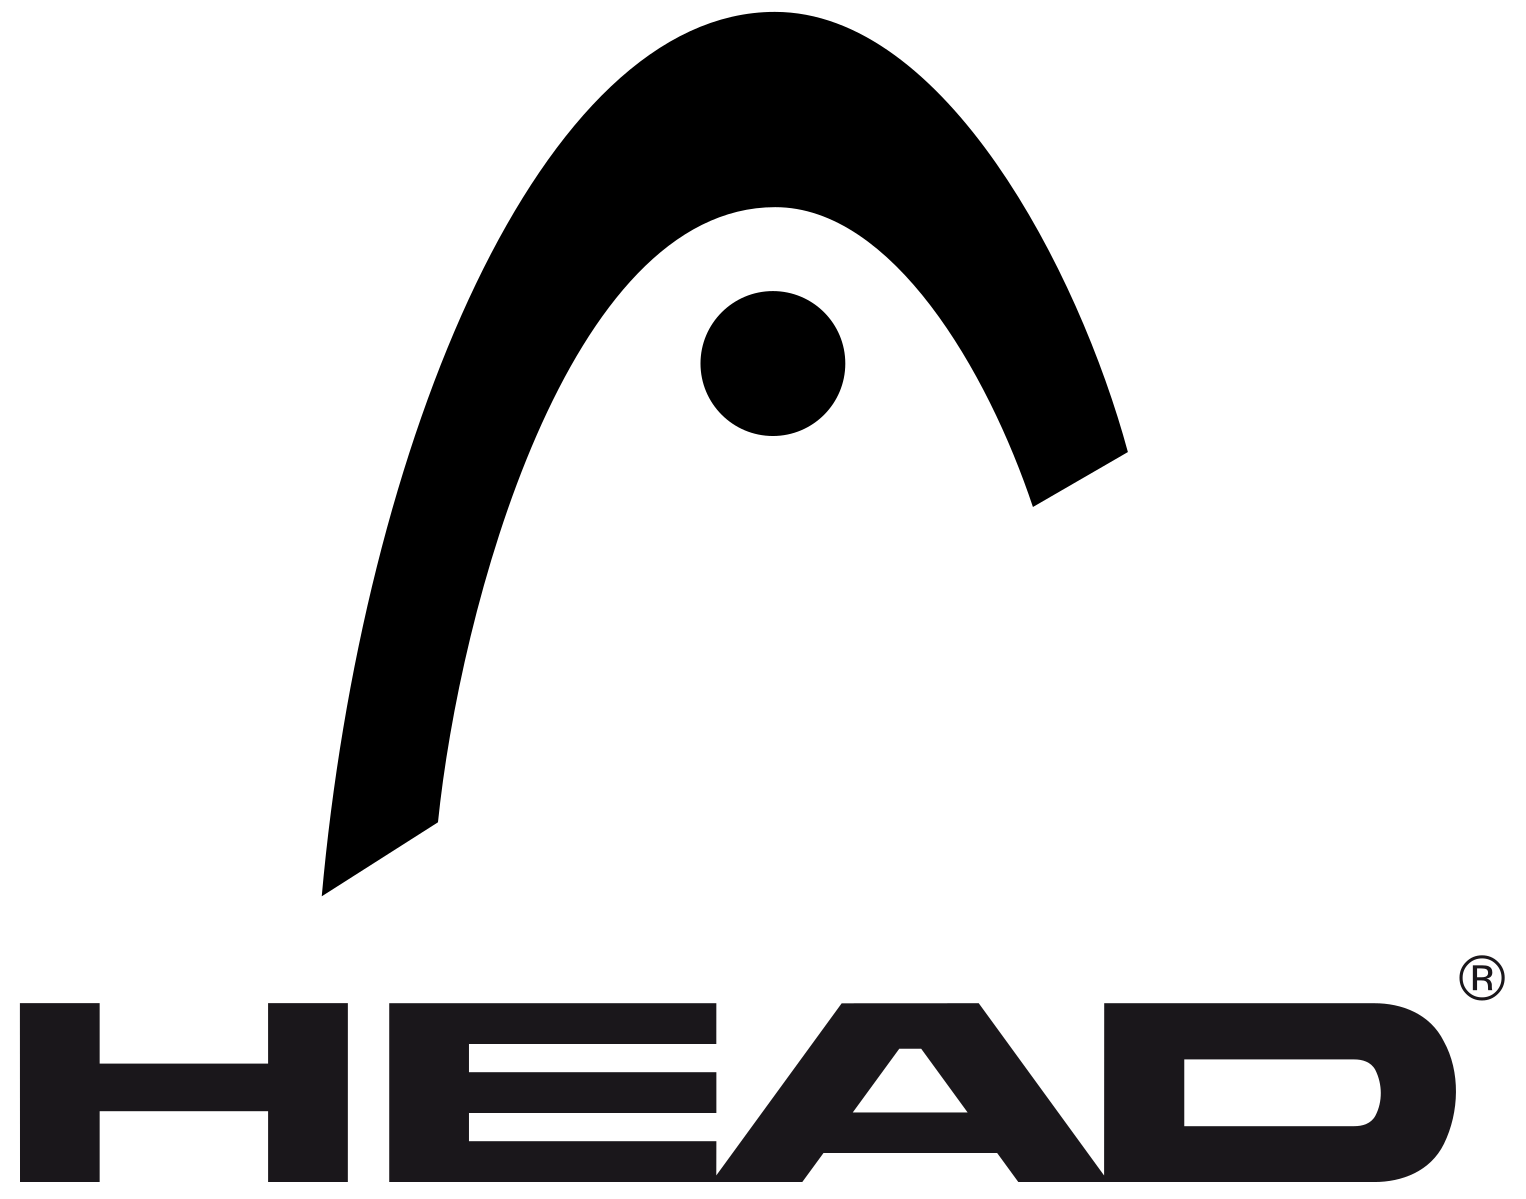 1526px-Head-logo.svg.png